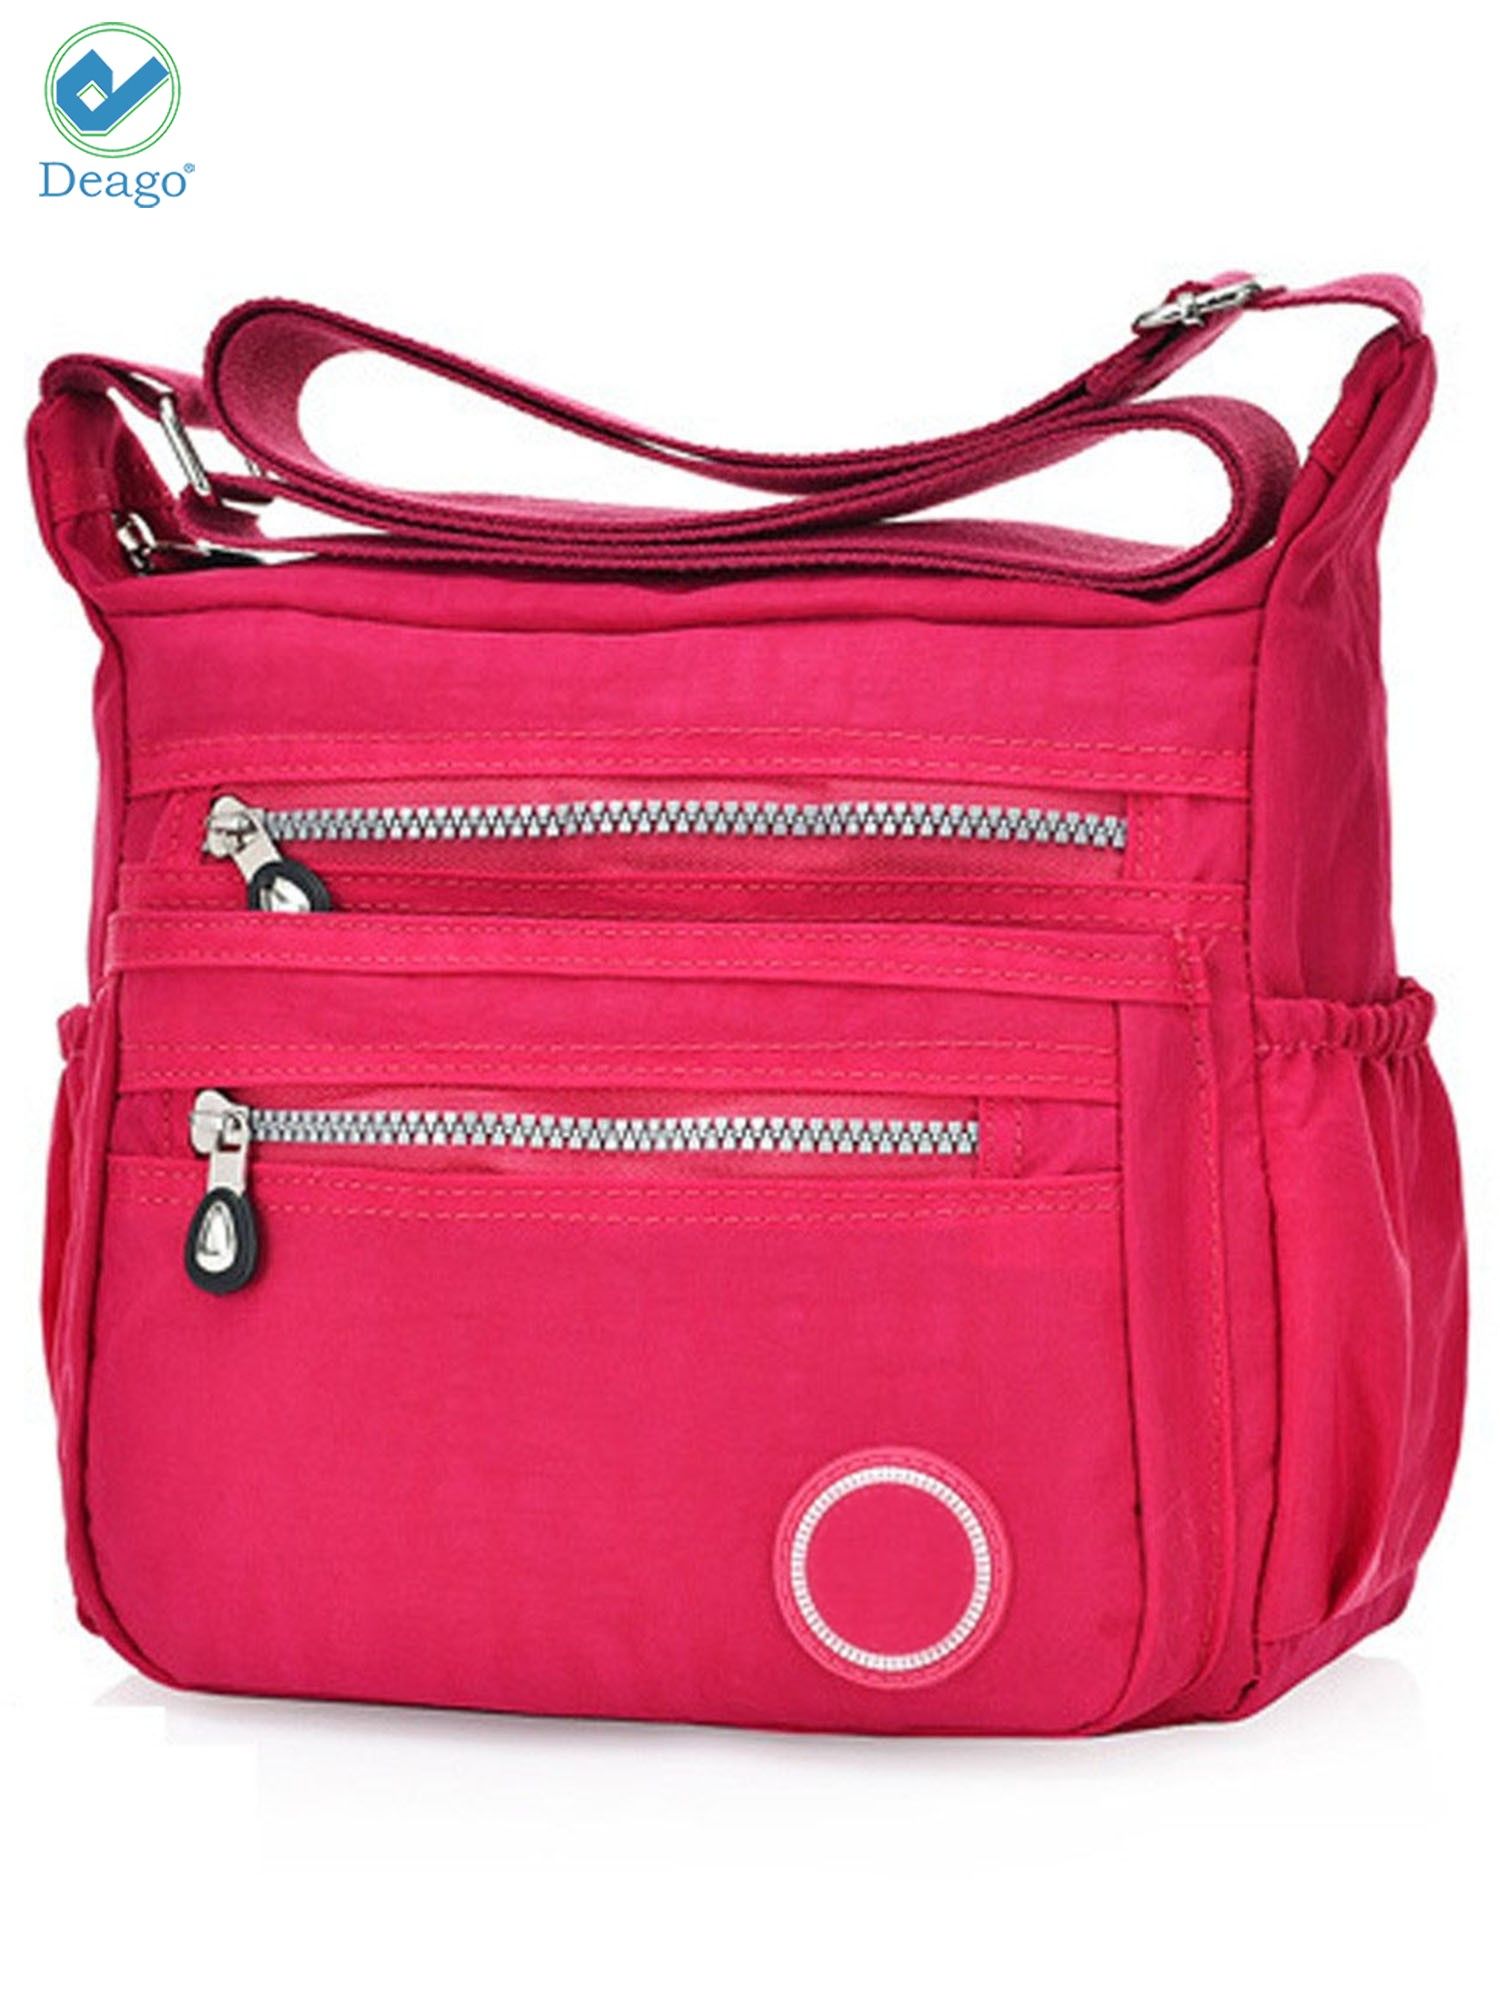 Deago Women's Waterproof Nylon Crossboby Shoulder Bag Casual Messenger Bag Handbag with Multi Pockets (Rose Red) - image 1 of 10